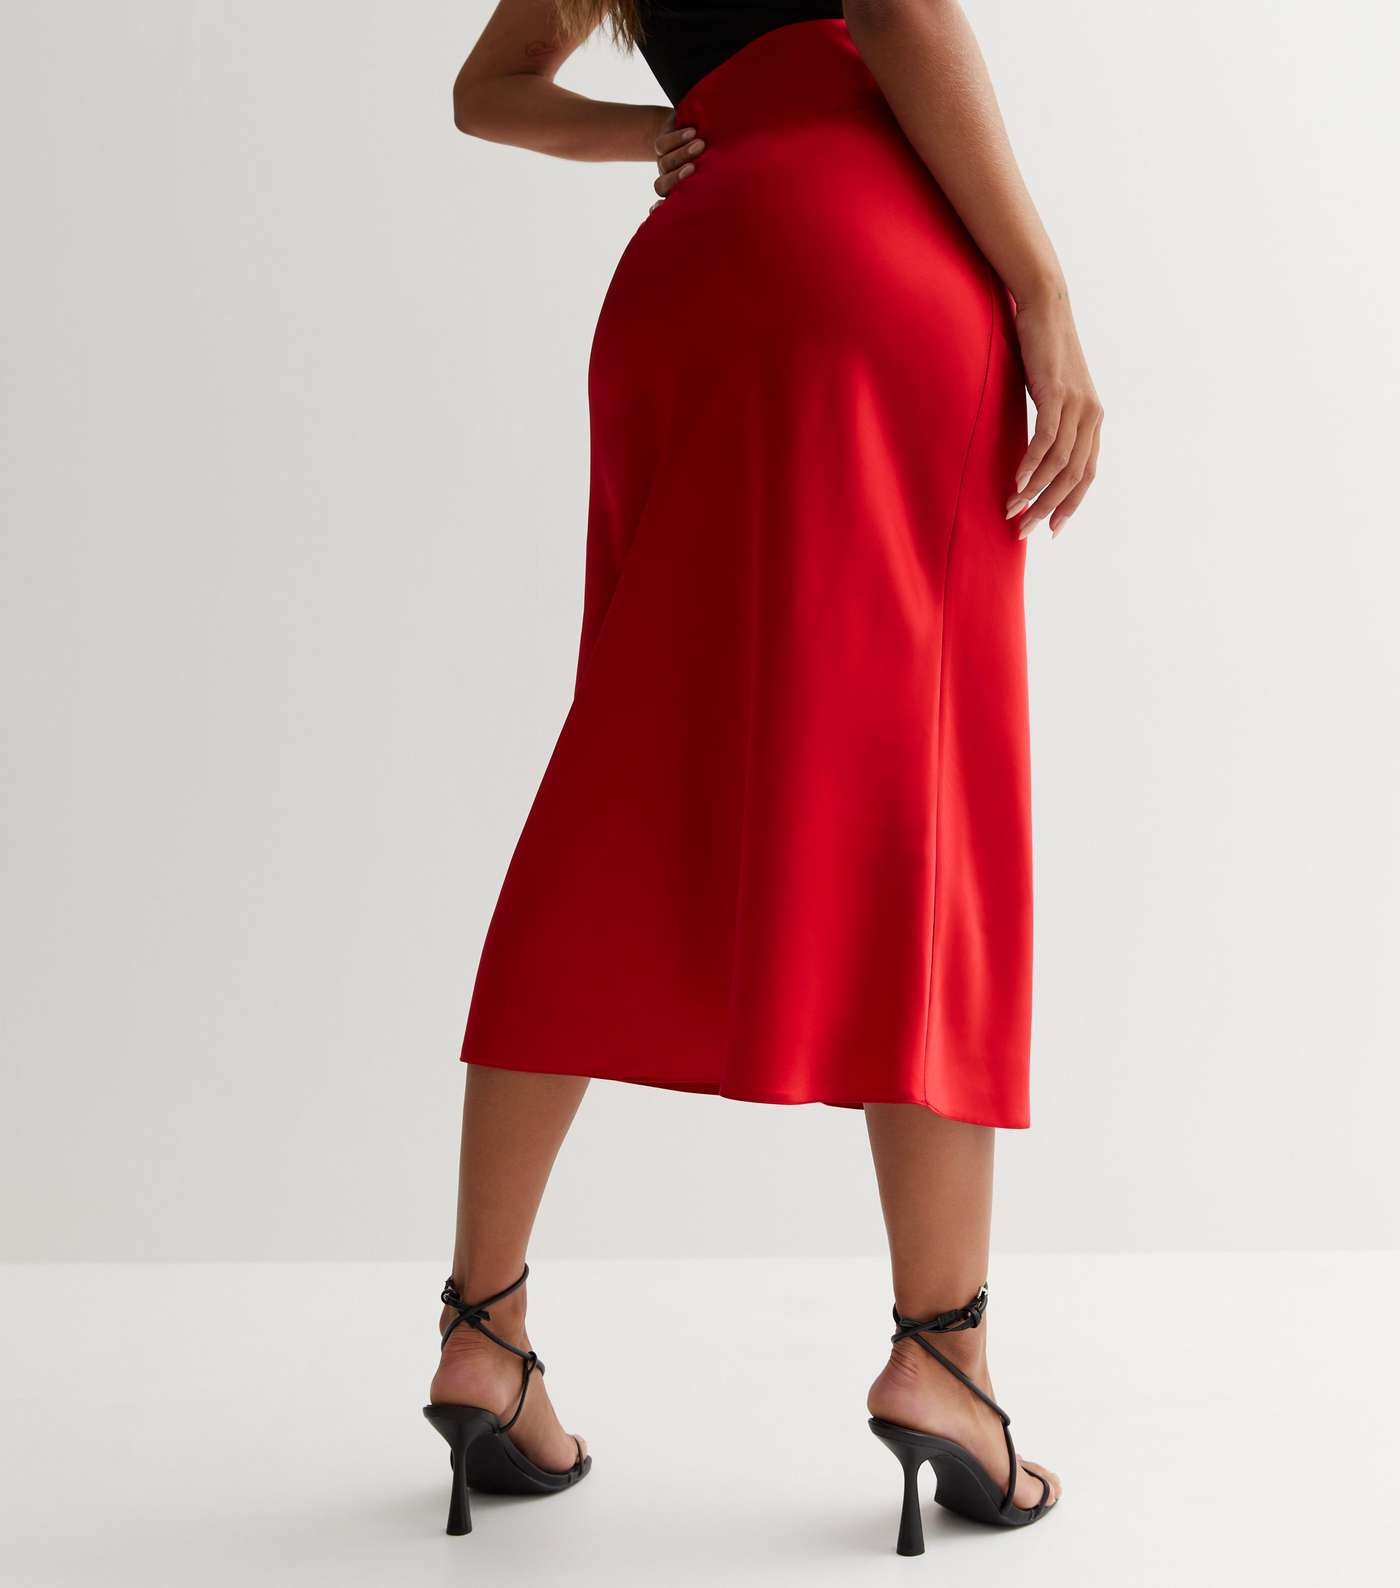 Red Satin Bias Cut Midaxi Skirt Image 4